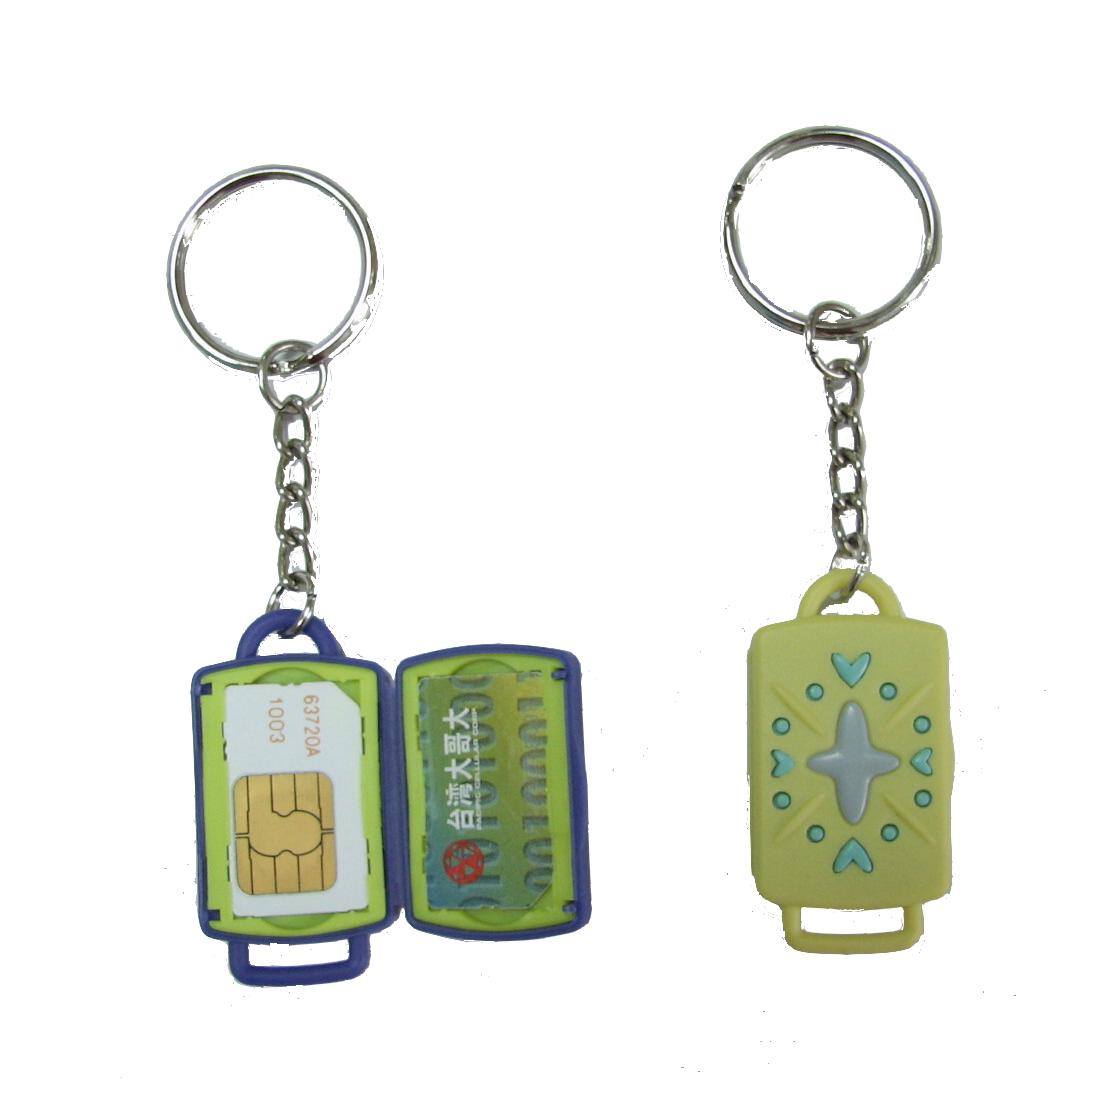  Key Chain With SIM Card Holder ( Key Chain With SIM Card Holder)